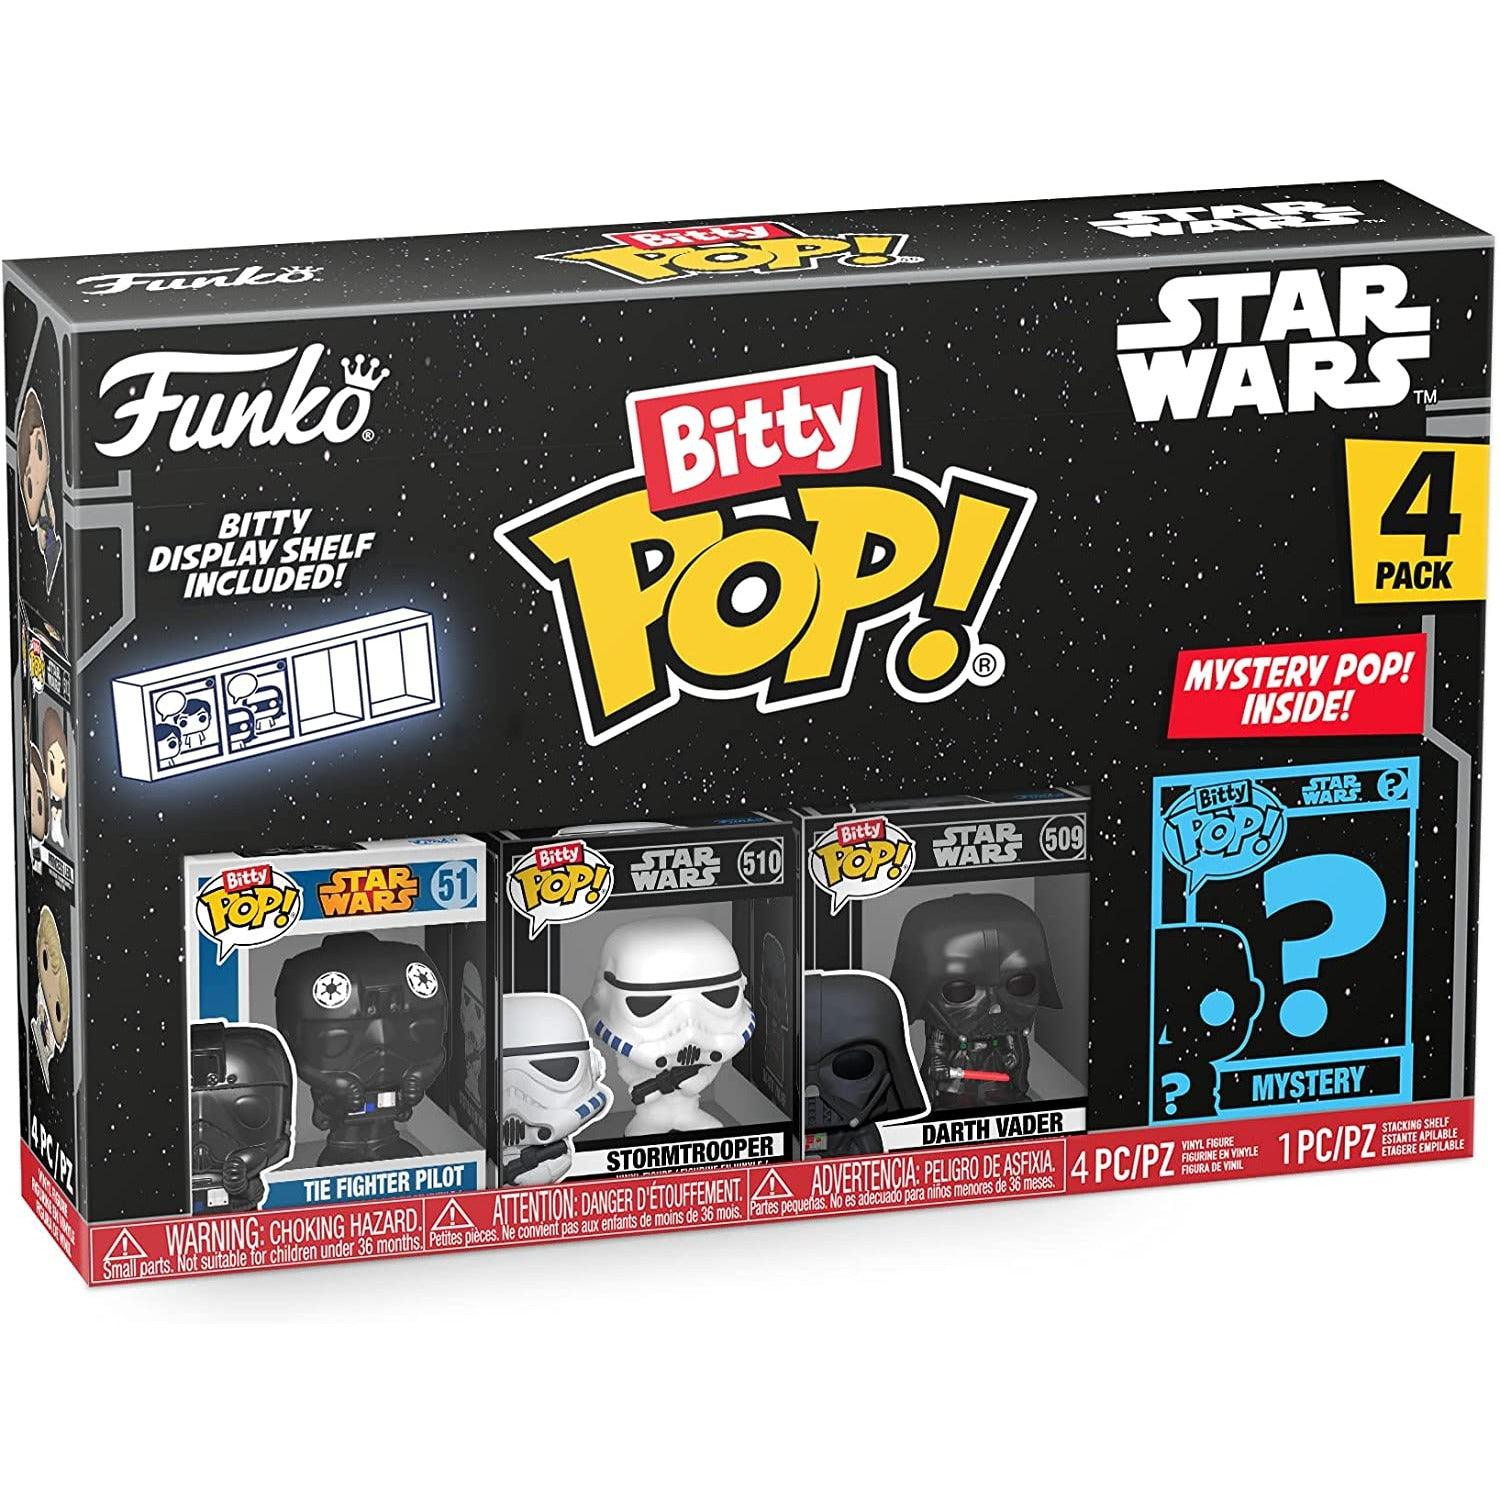 Funko Bitty Pop! Star Wars - Darth Vader 4-Pack Series 4 - BumbleToys - 18+, Boys, Funko, Pre-Order, star wars